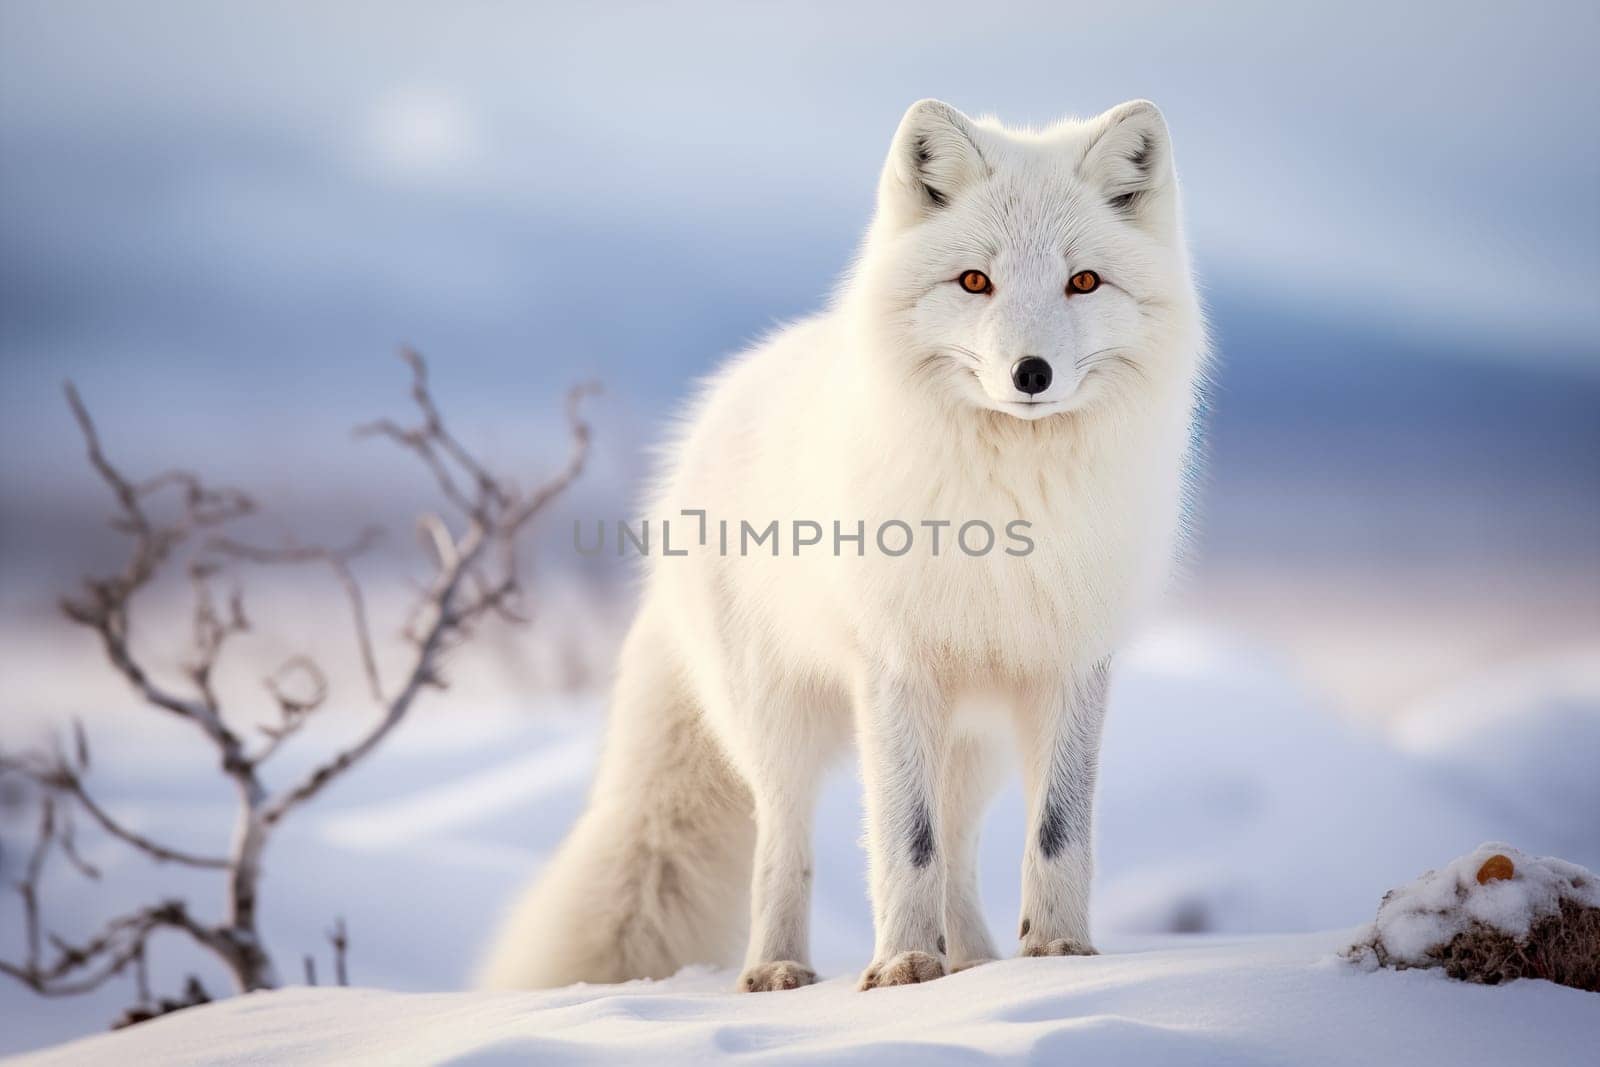 White Arctic Fox in Snowy Landscape by dimol